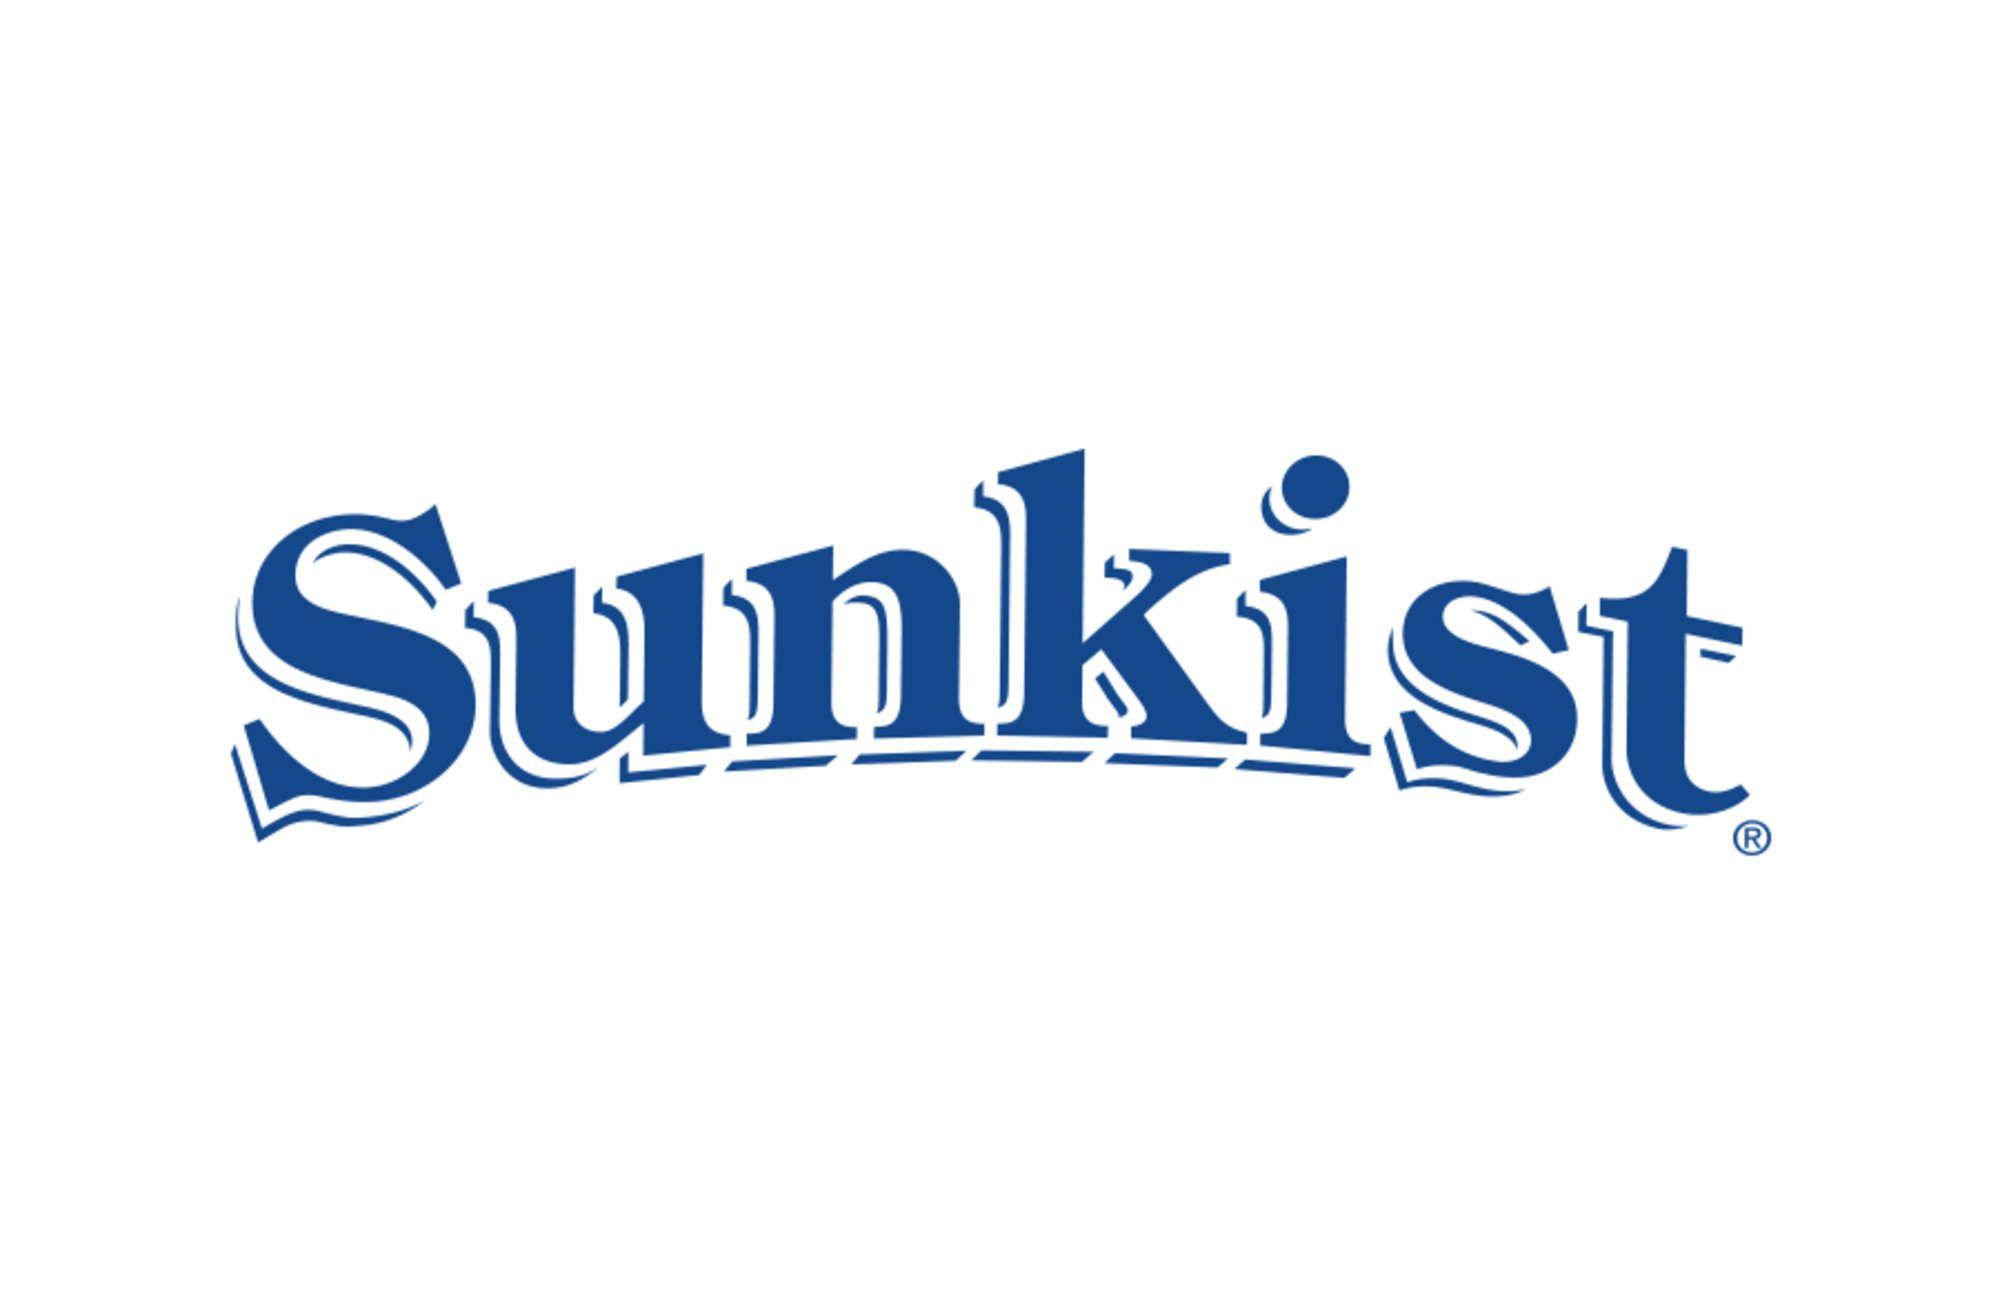 New Sunkist Logo - Sunkist - RedKor